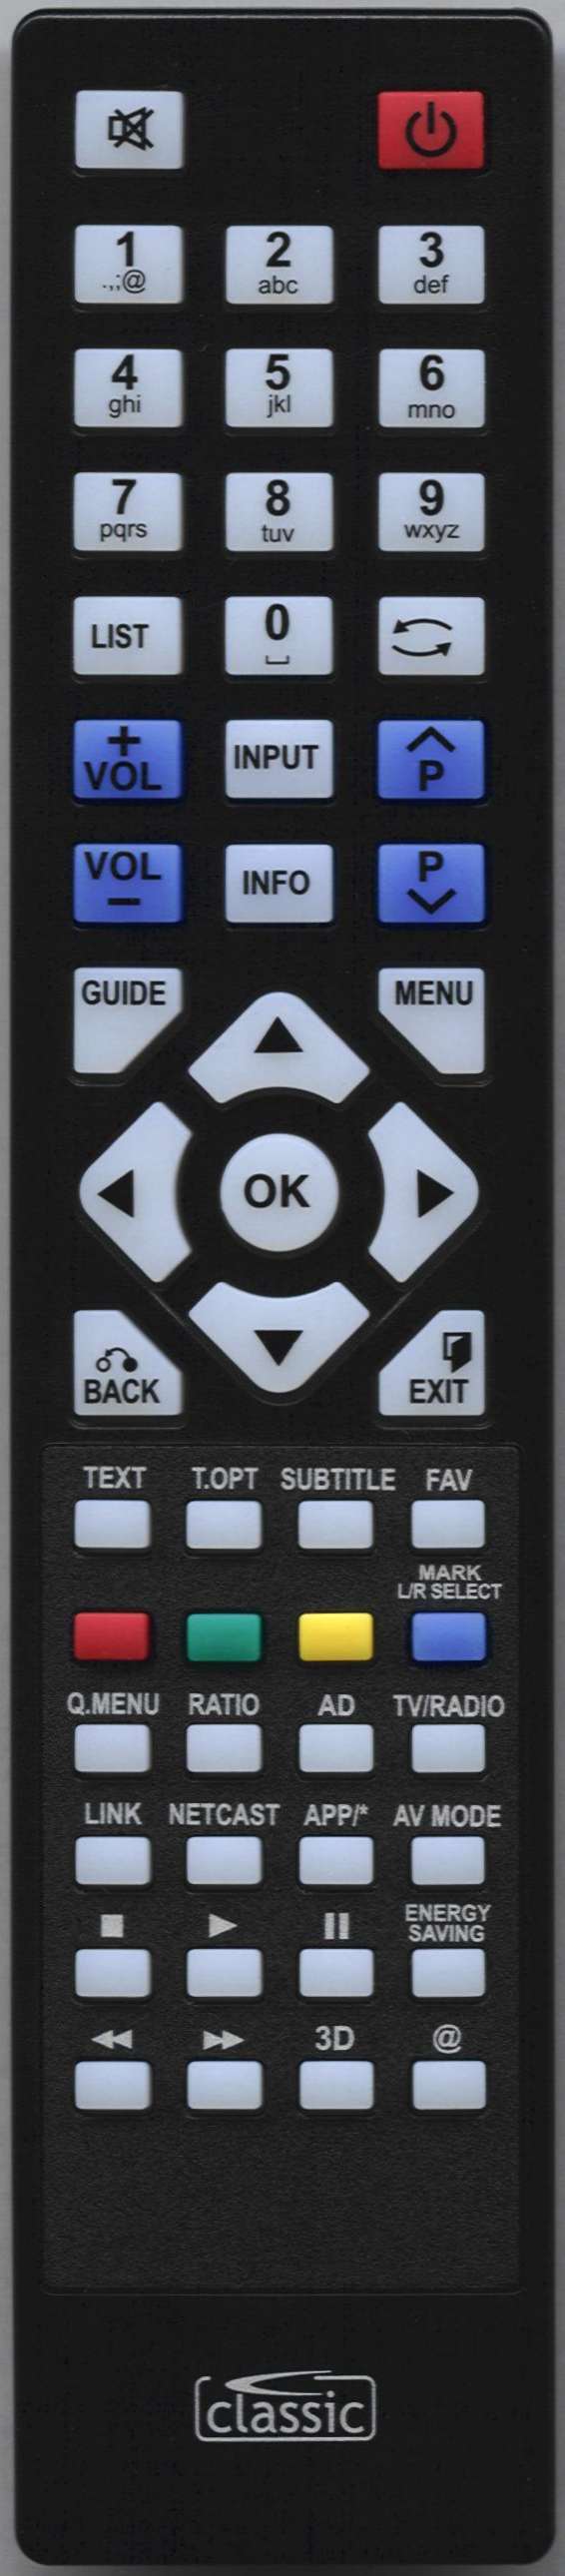 LG 42PA4500-ZM Remote Control Alternative